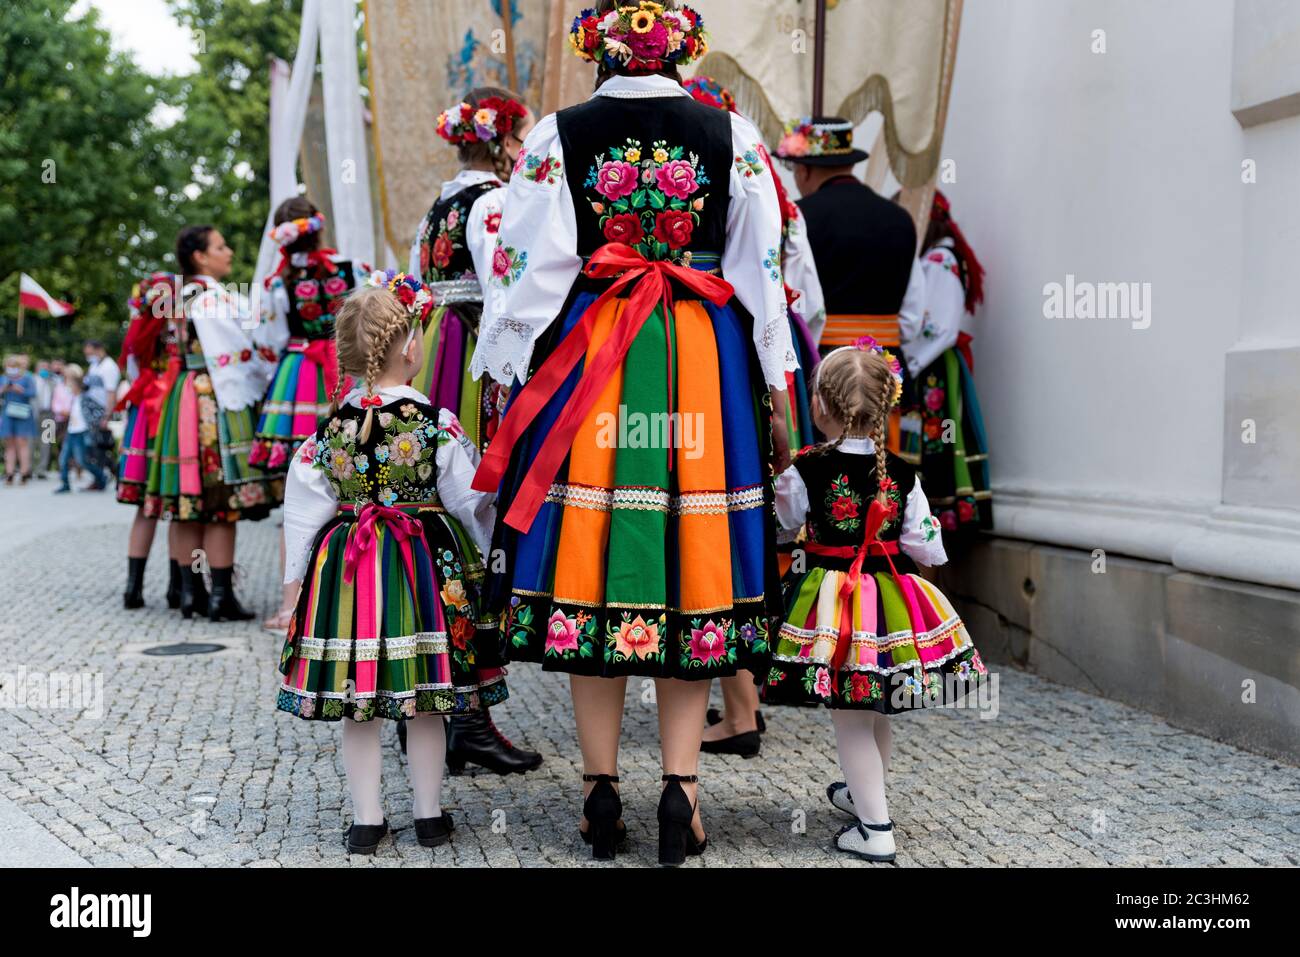 Lowicz, Jun 11, 2020: People dressed in polish national folk costumes ...